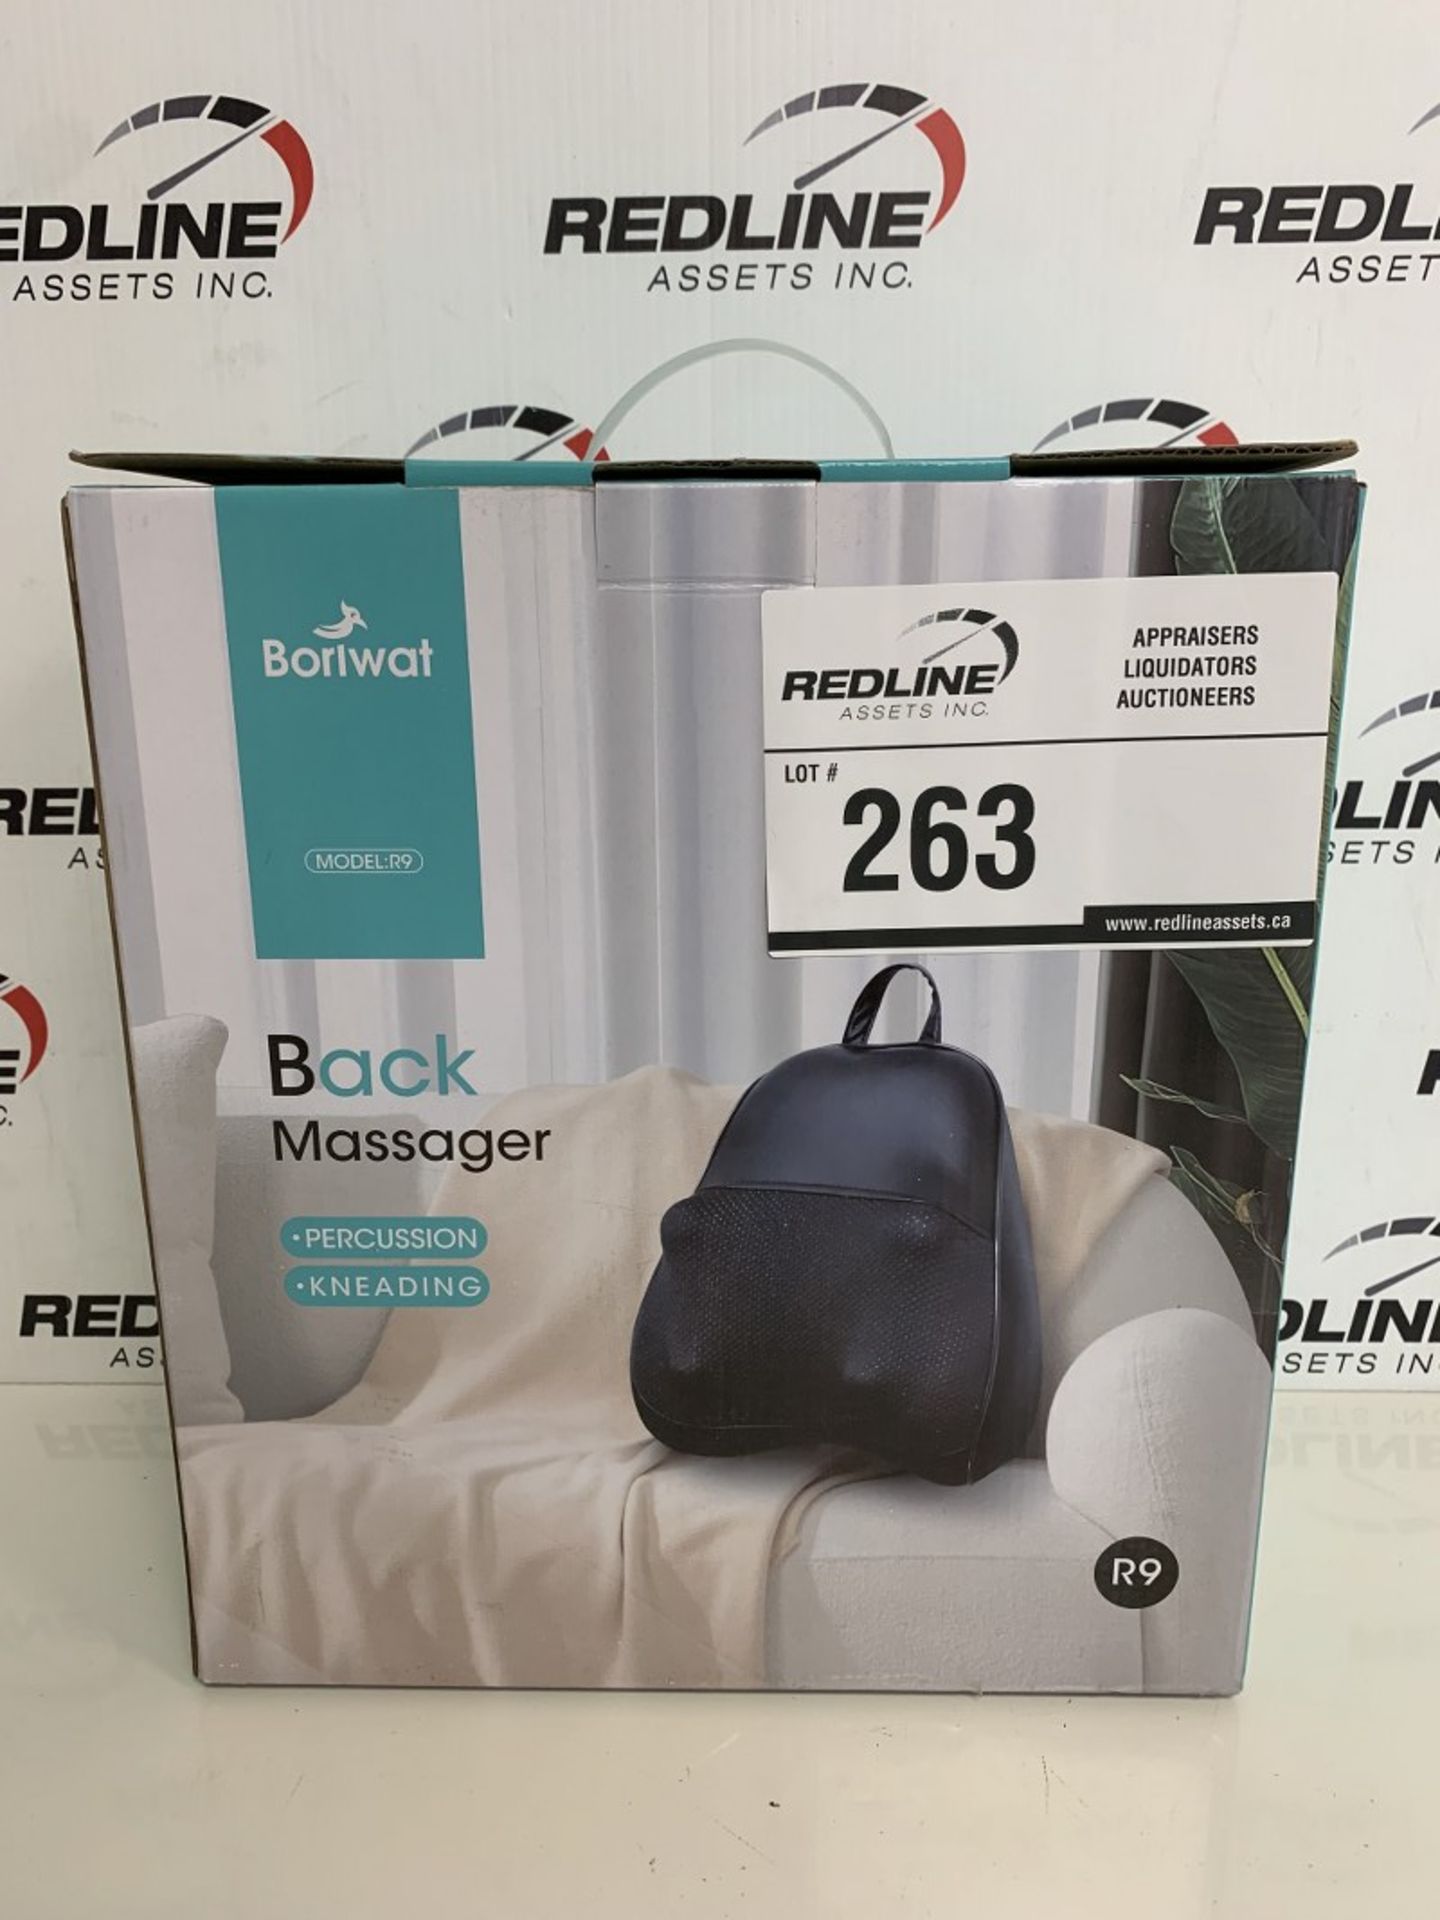 Borlwat - Back Massager